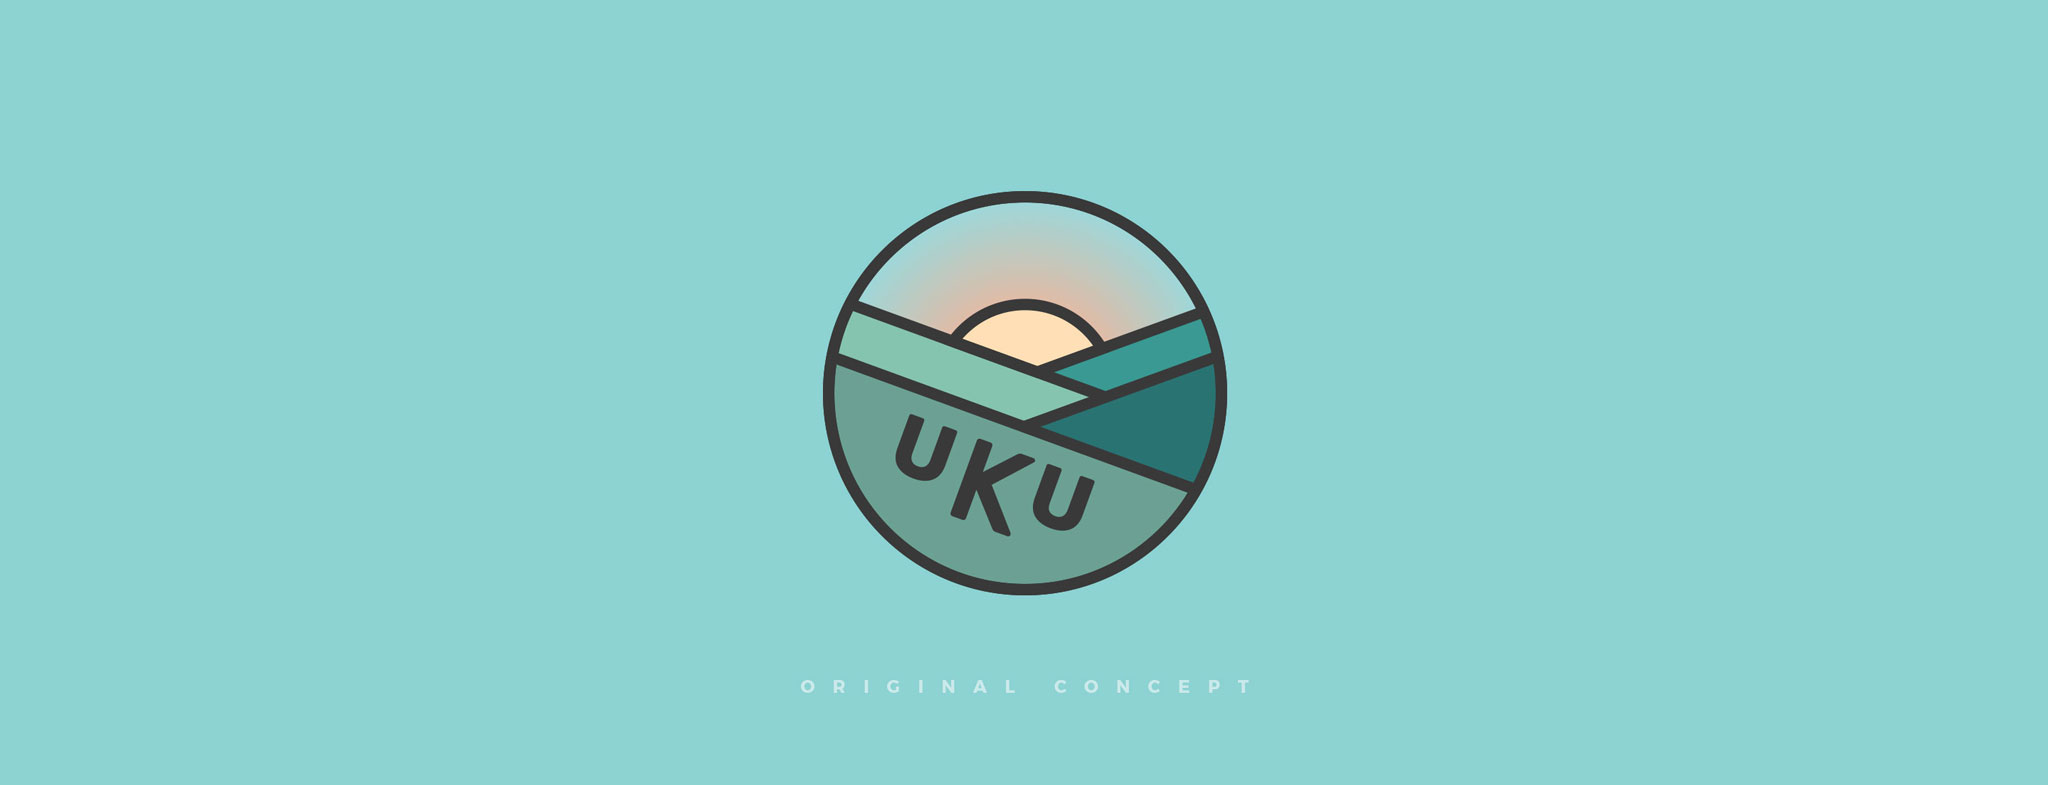 uku cannabis logo design concept